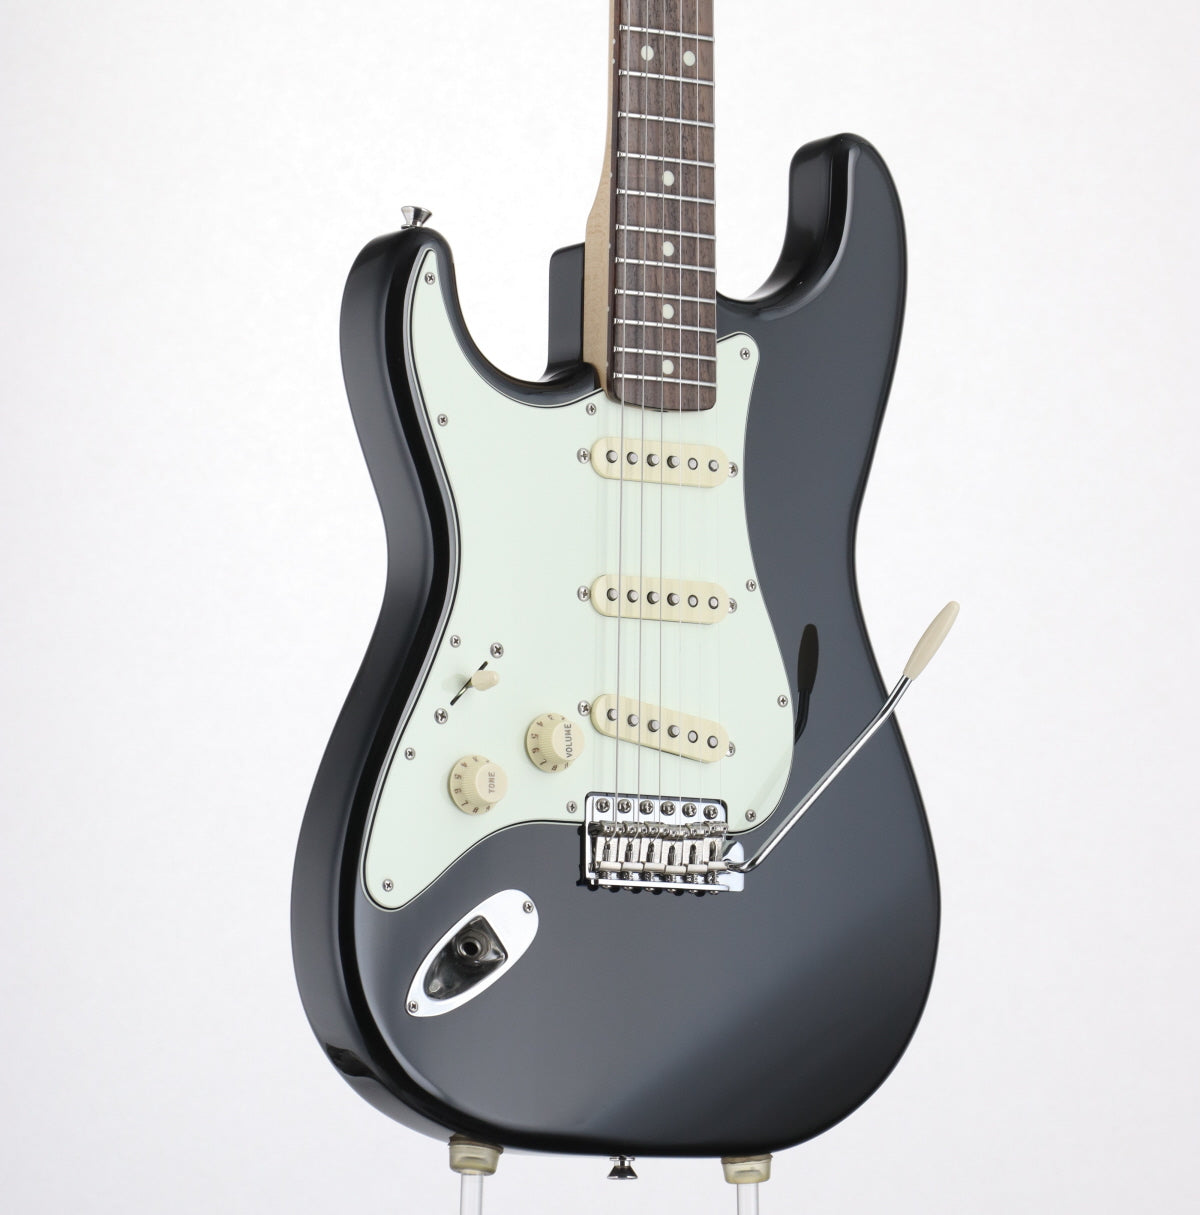 [SN JD1900783] USED Fender / Stratocaster Seattle Black Rosewood Fingerboard 2019 [06]